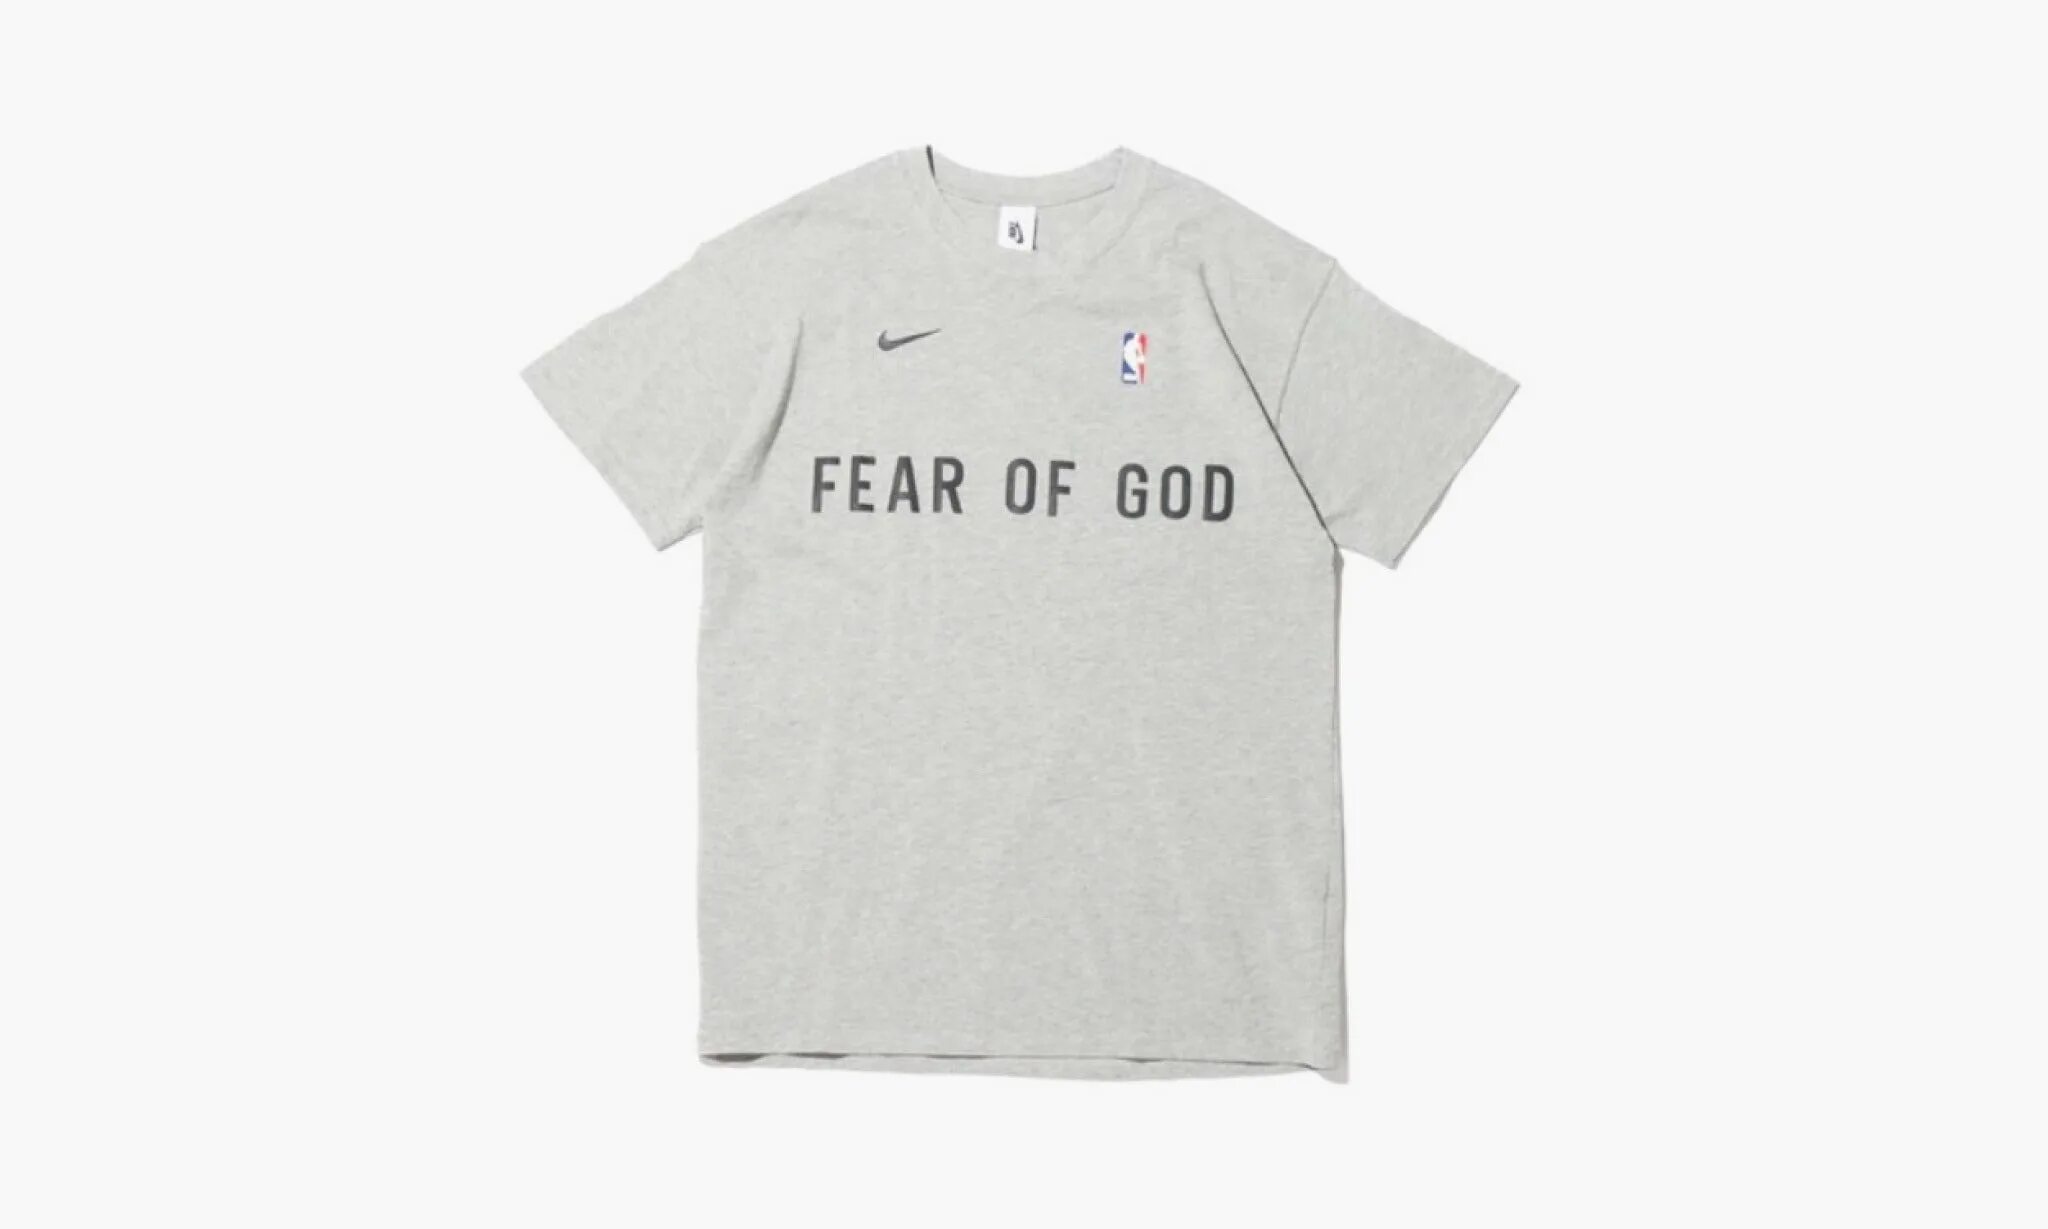 Fear of god купить. Fear of God футболка NBA. Майка Nike Fear of God. Футболка Fog x Nike. Nike x Fear of God x NBA.